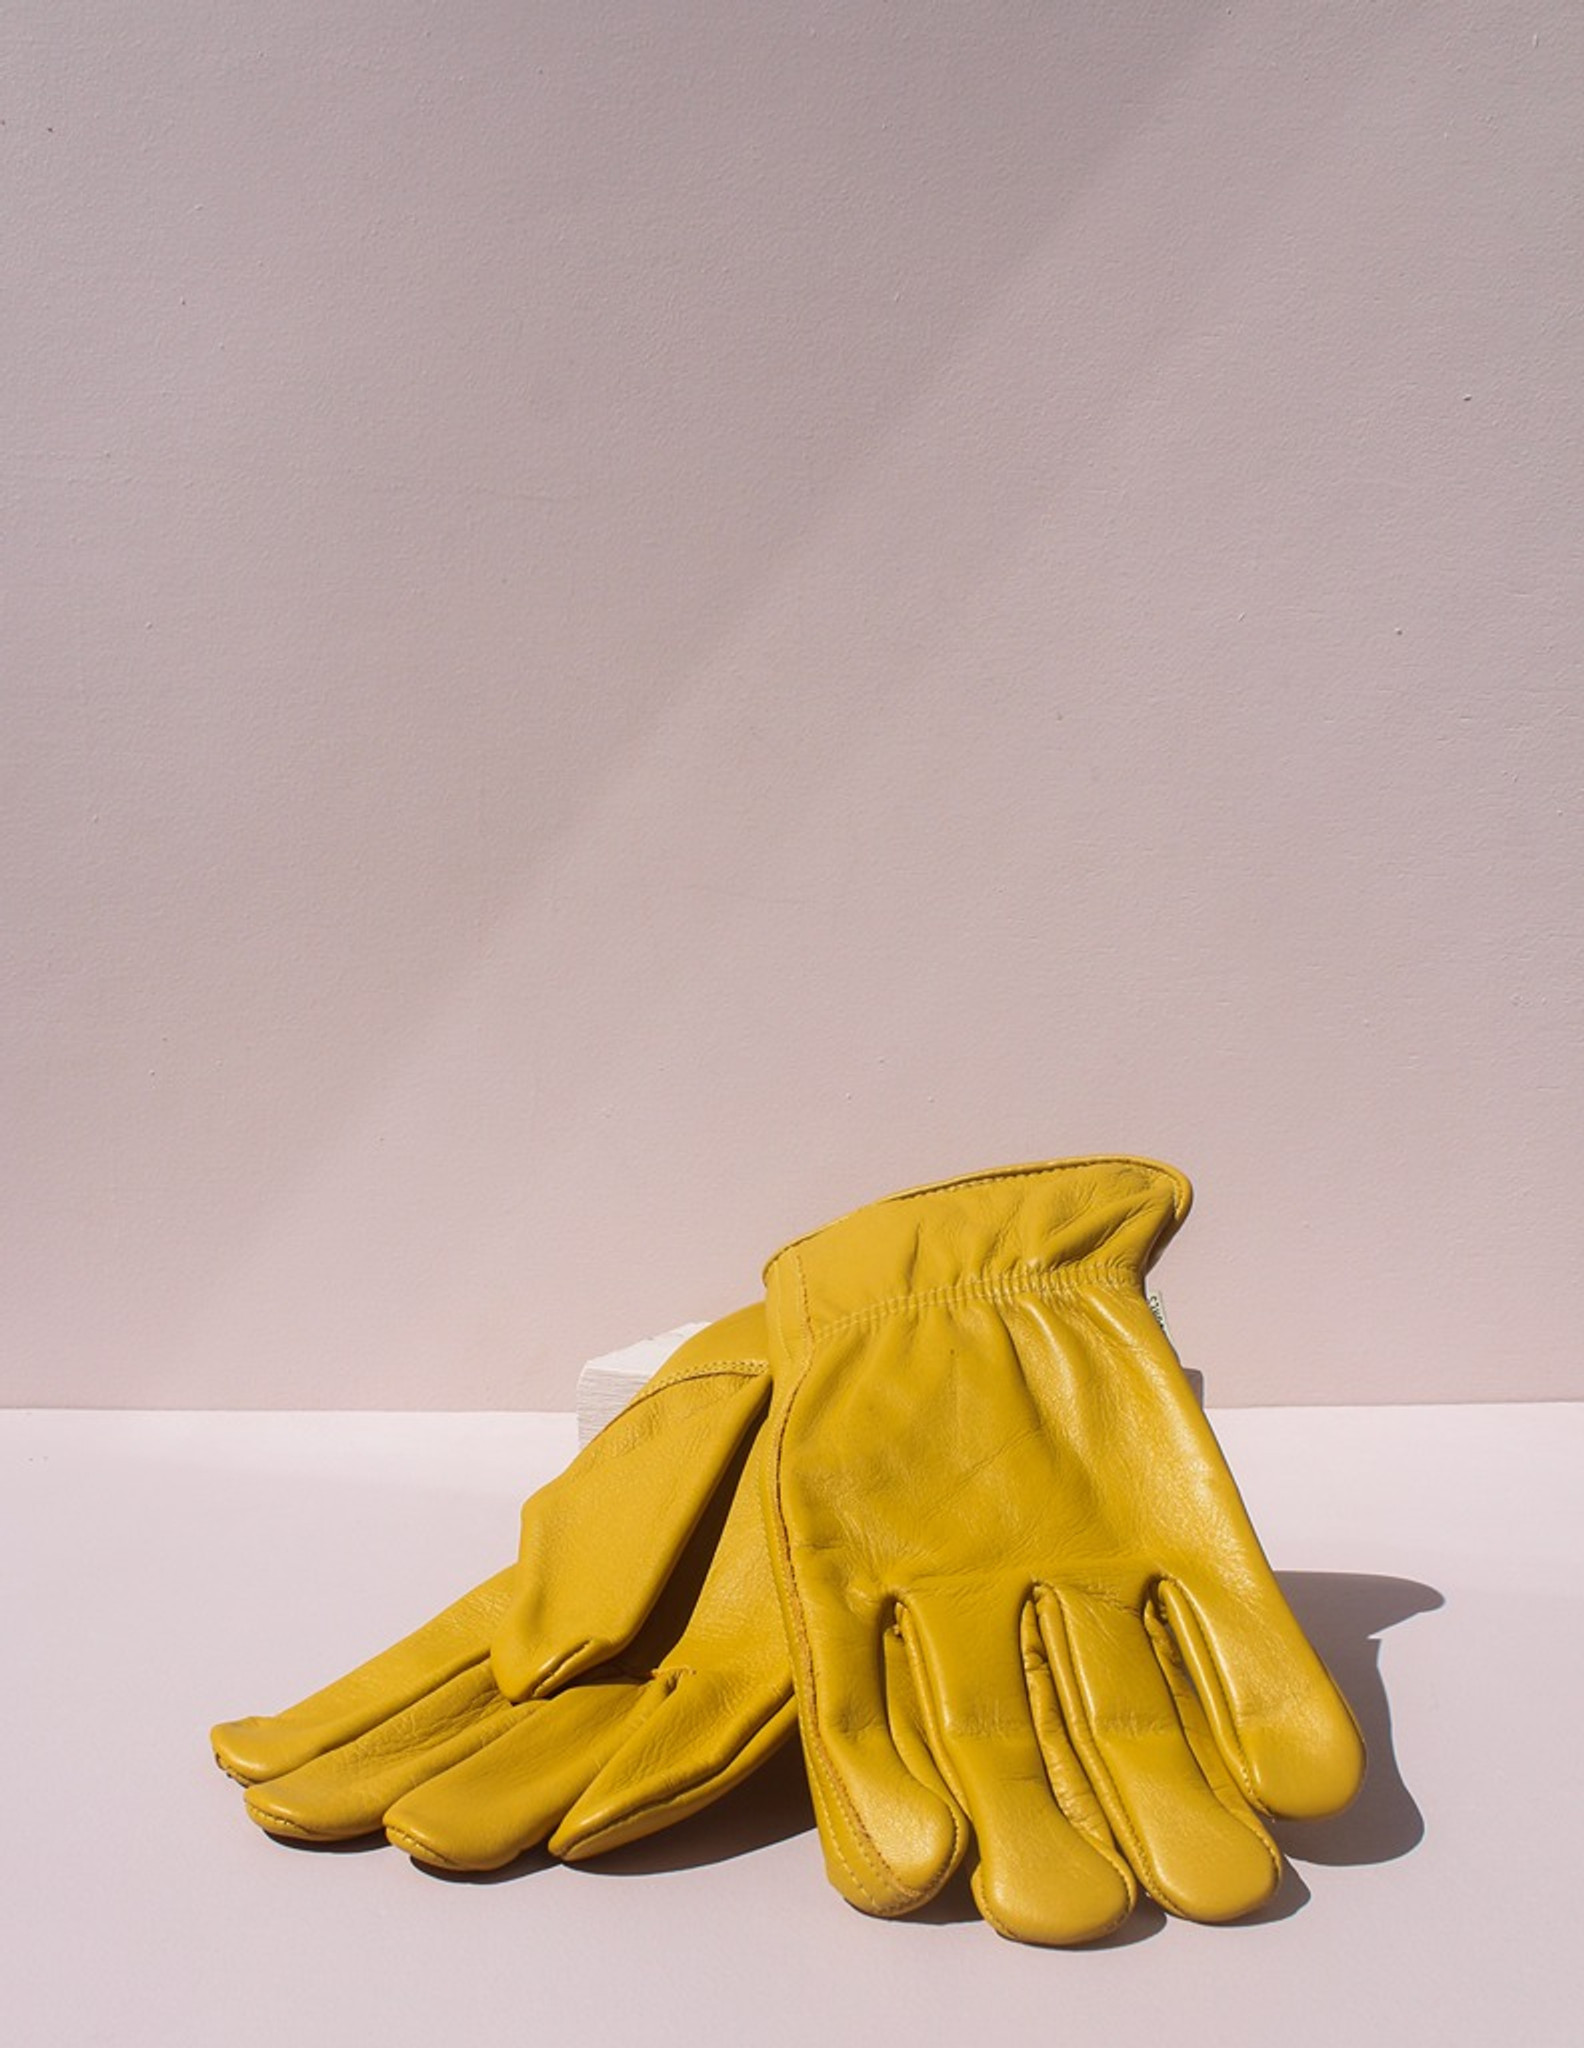 Yellow Classic Work Glove Large